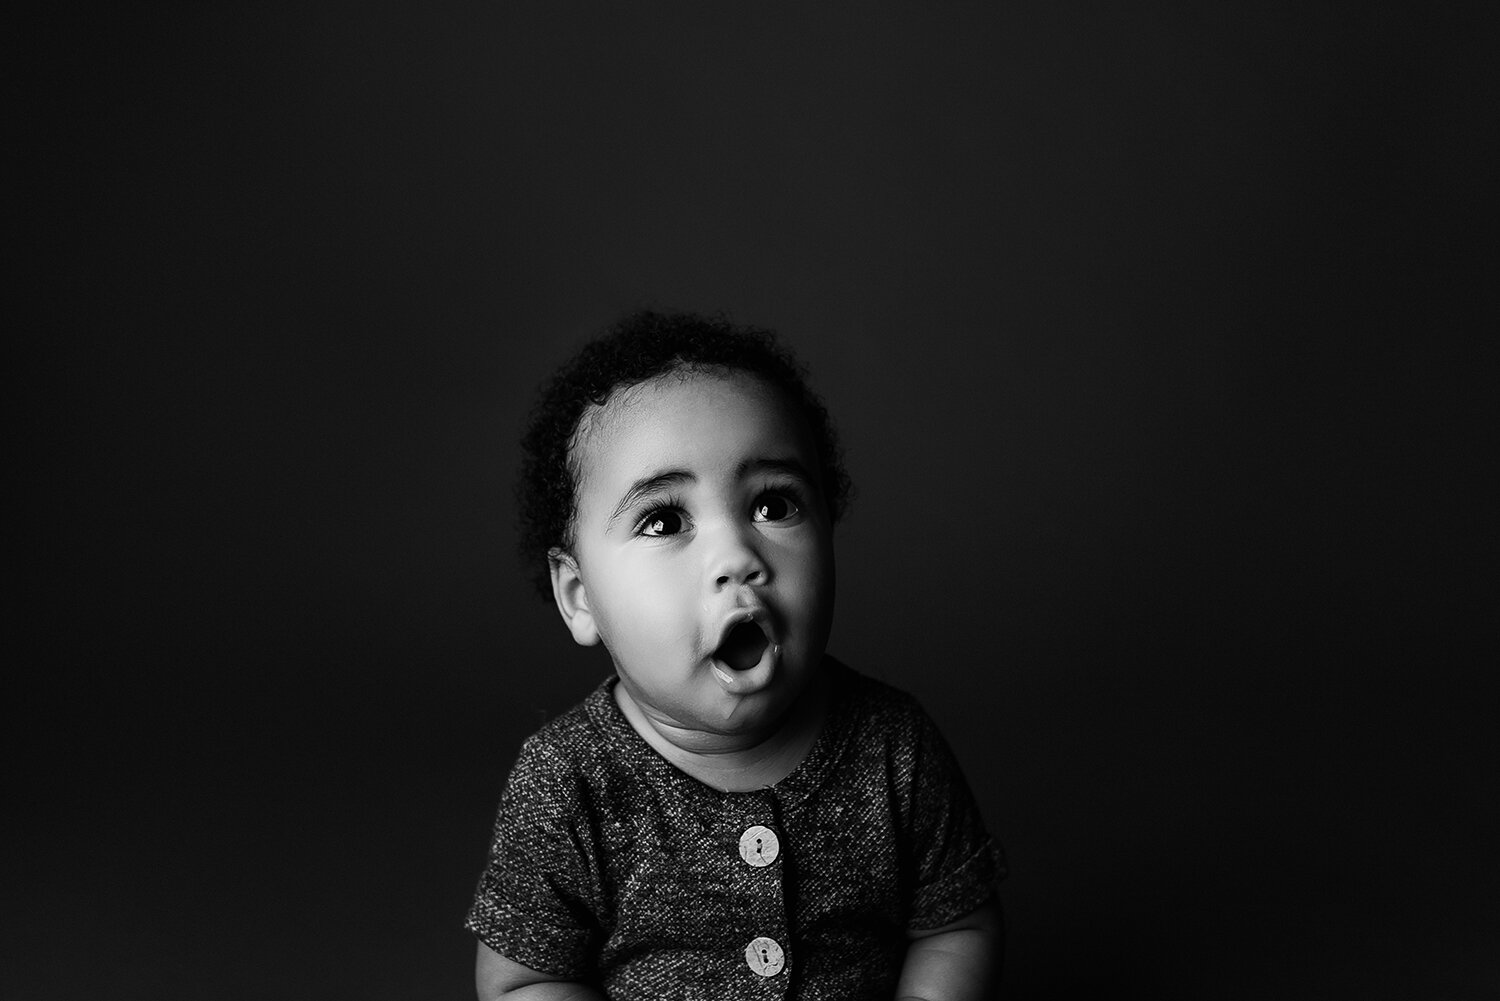 Baltimore Maryland Newborn Baby photography baby boy on black and white background Jessica Fenfert